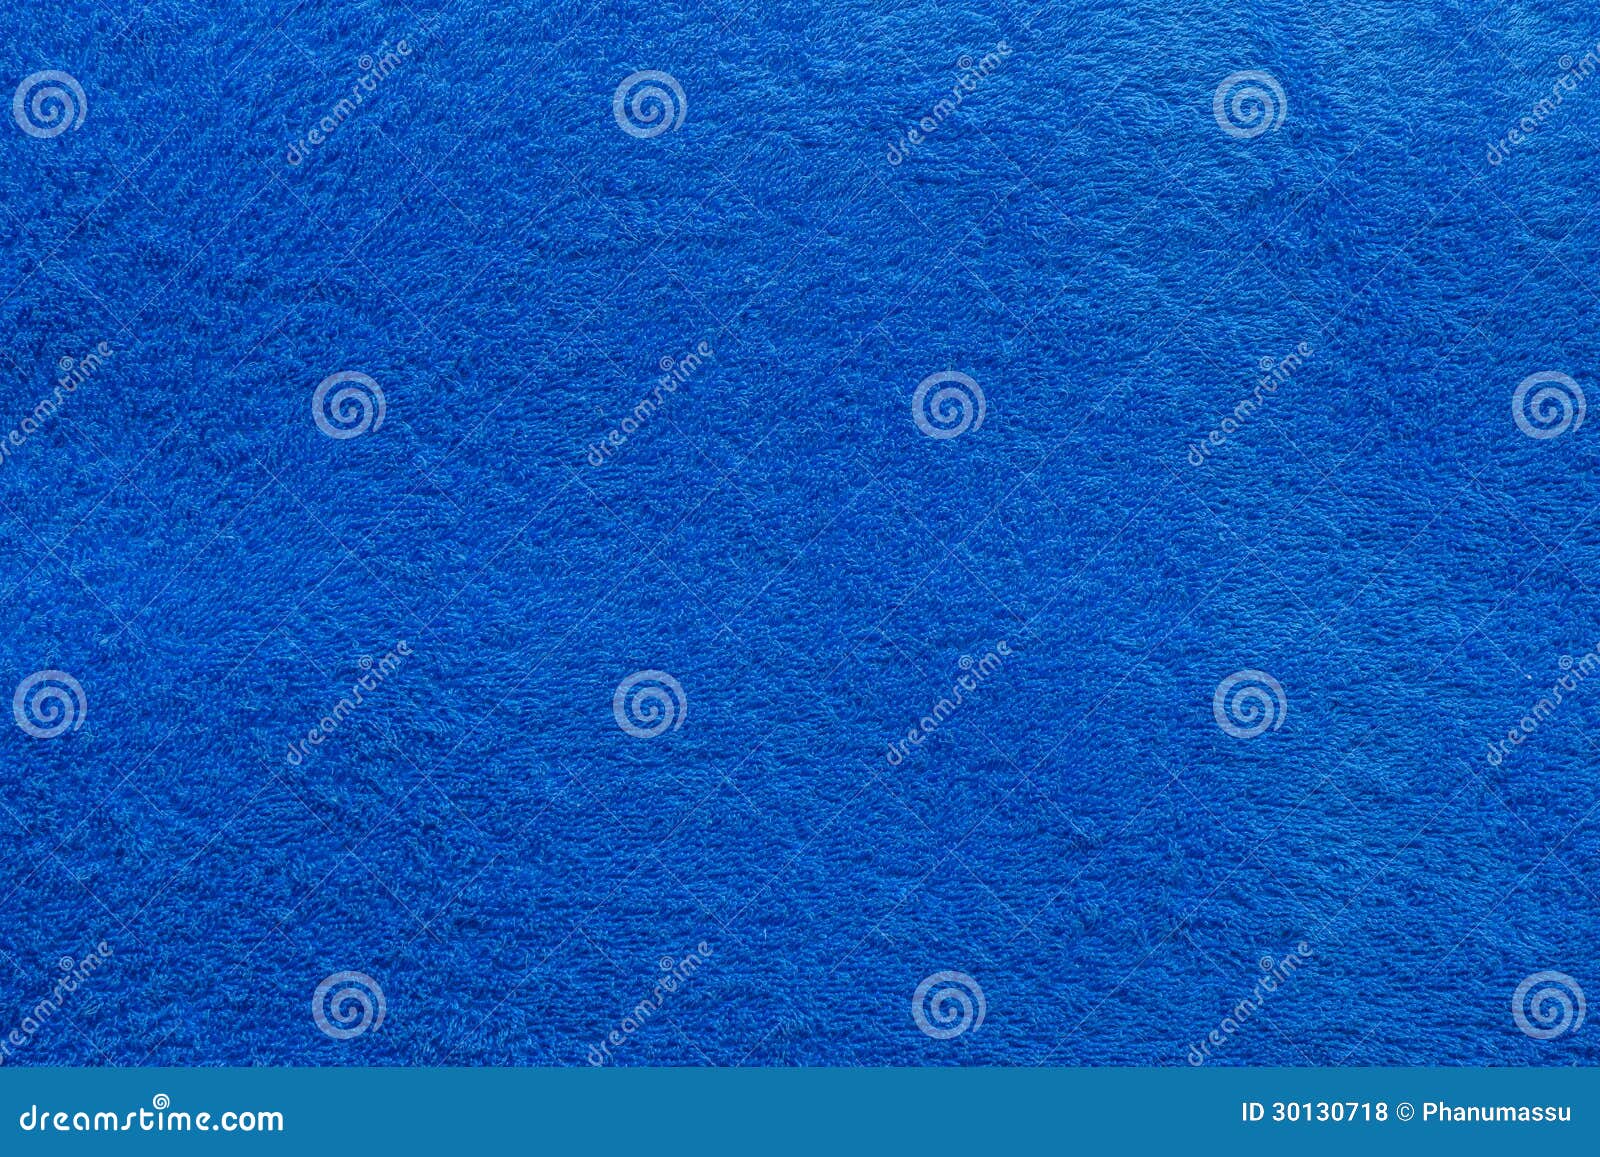 Blue fabric stock photo. Image of linen, background, macro - 30130718